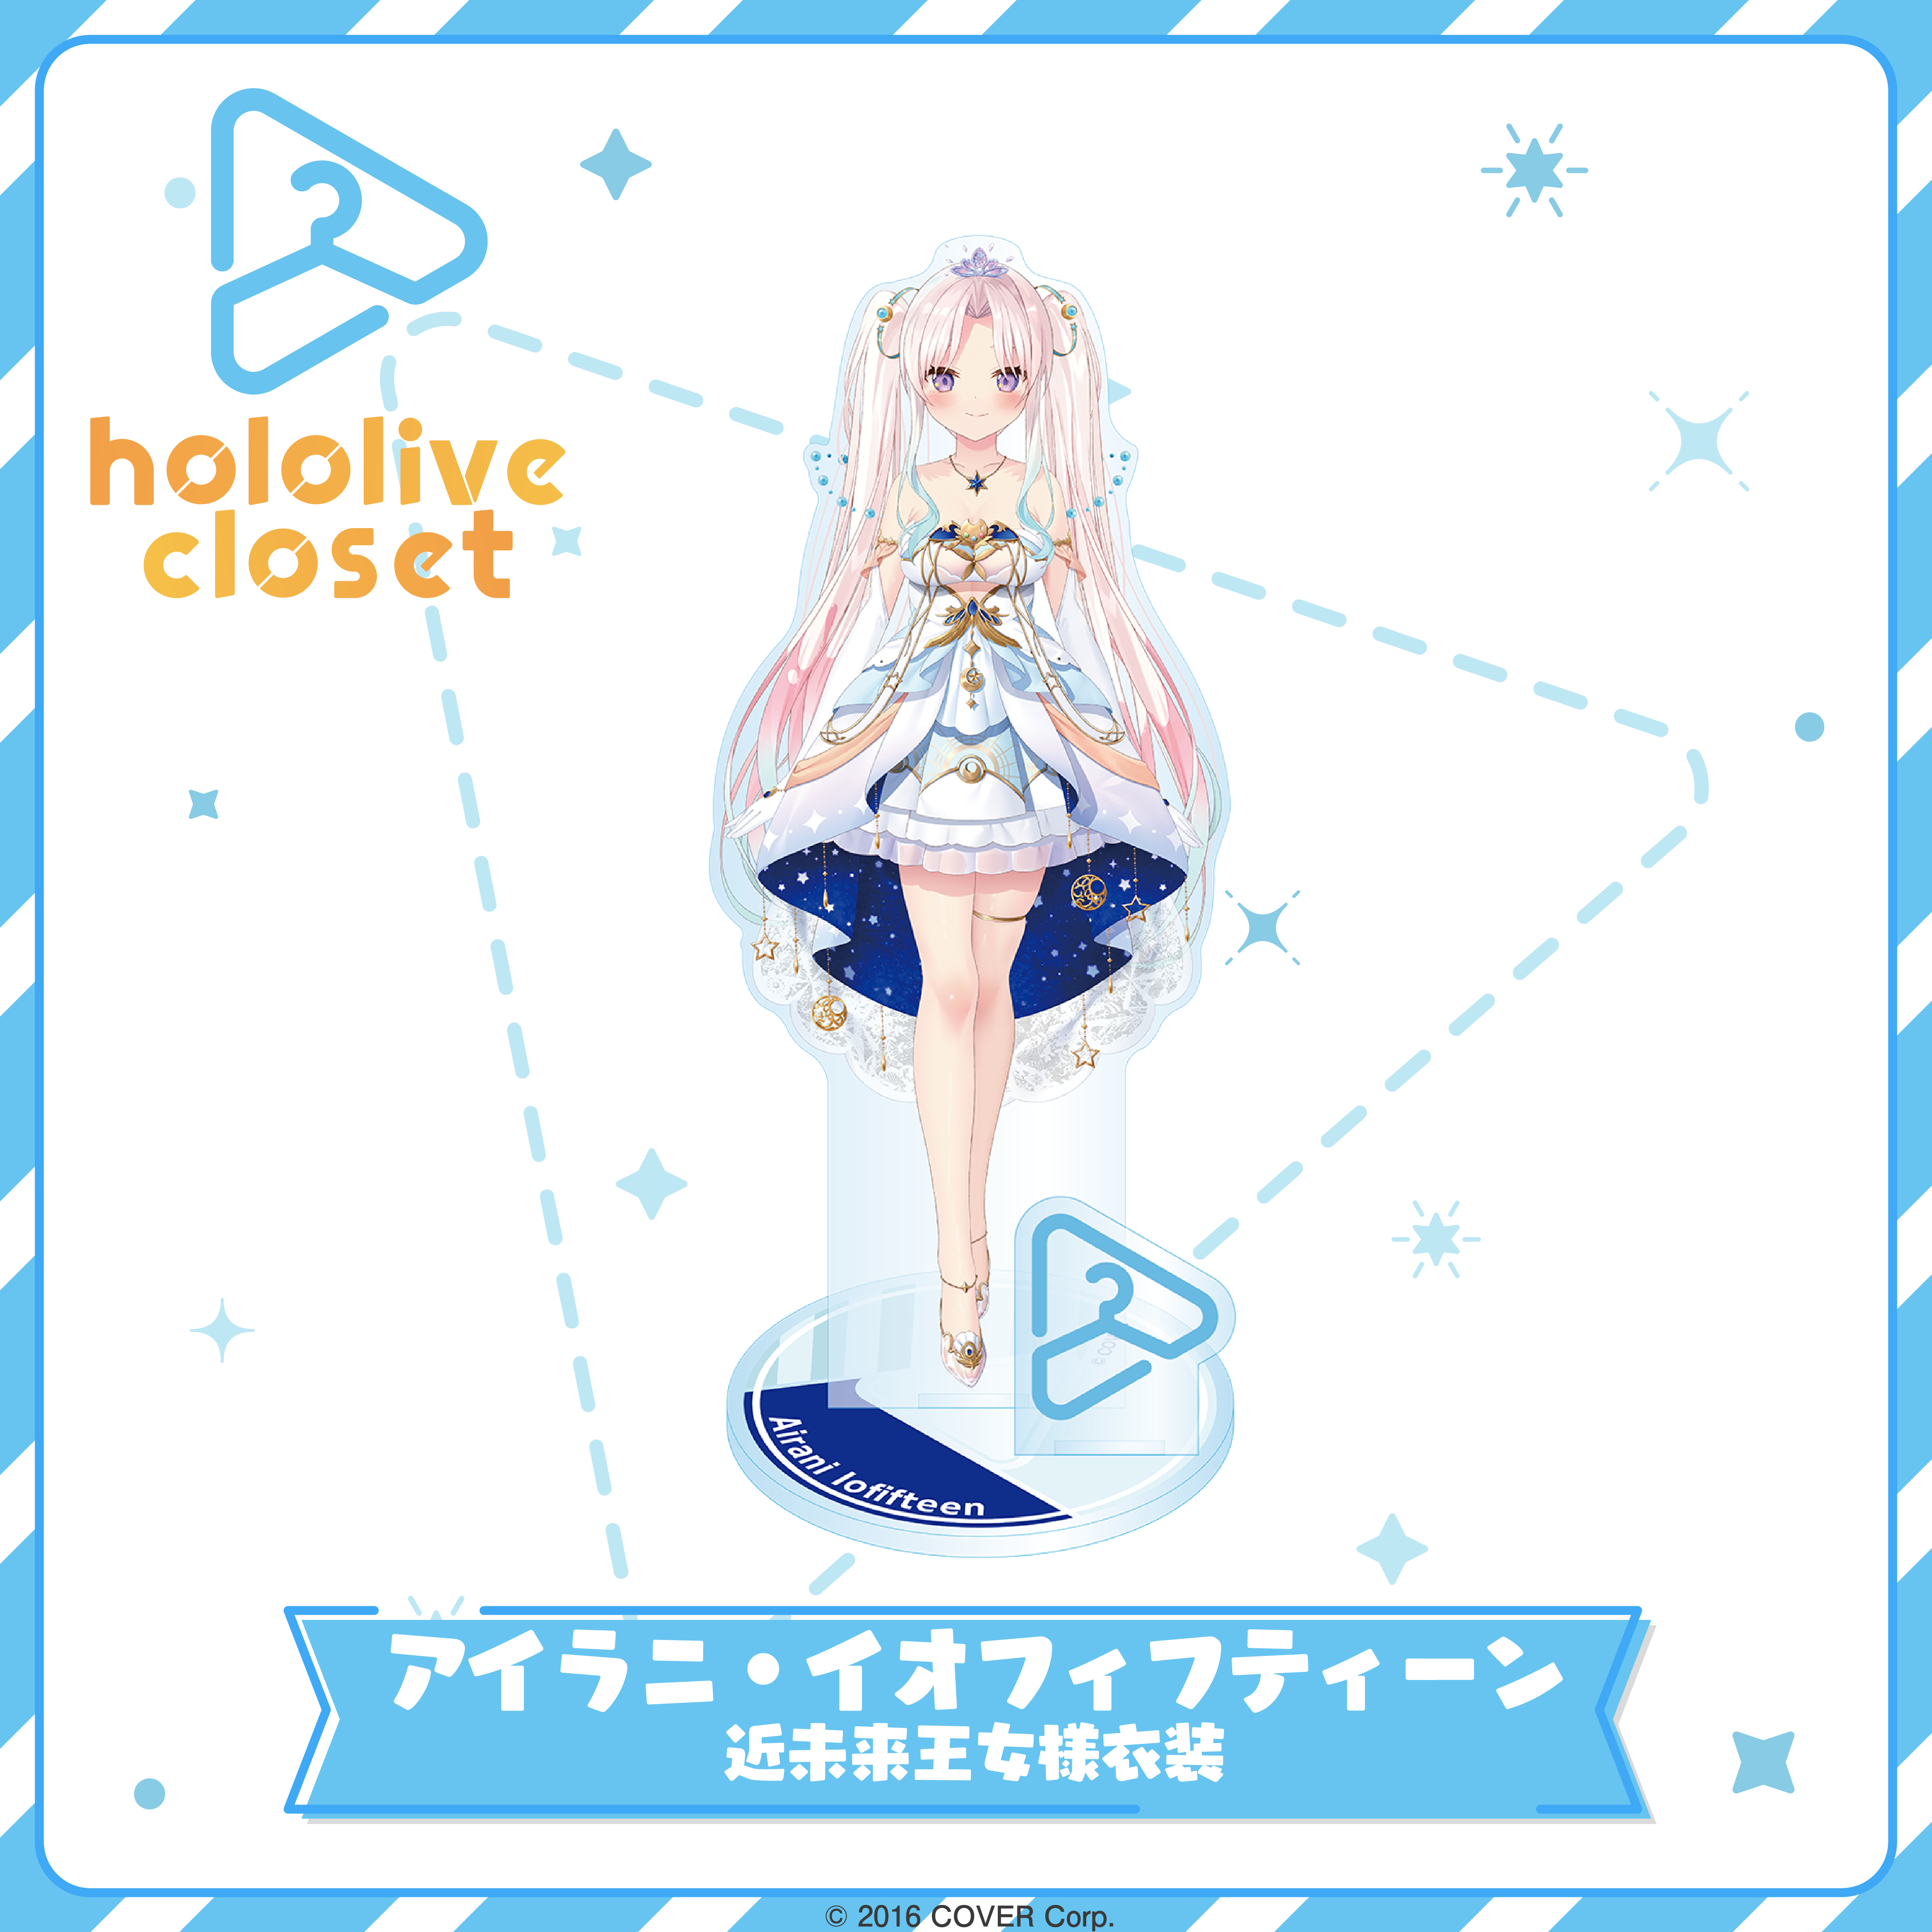 hololive closet アイラニ・イオフィフティーン 近未来王女様衣装